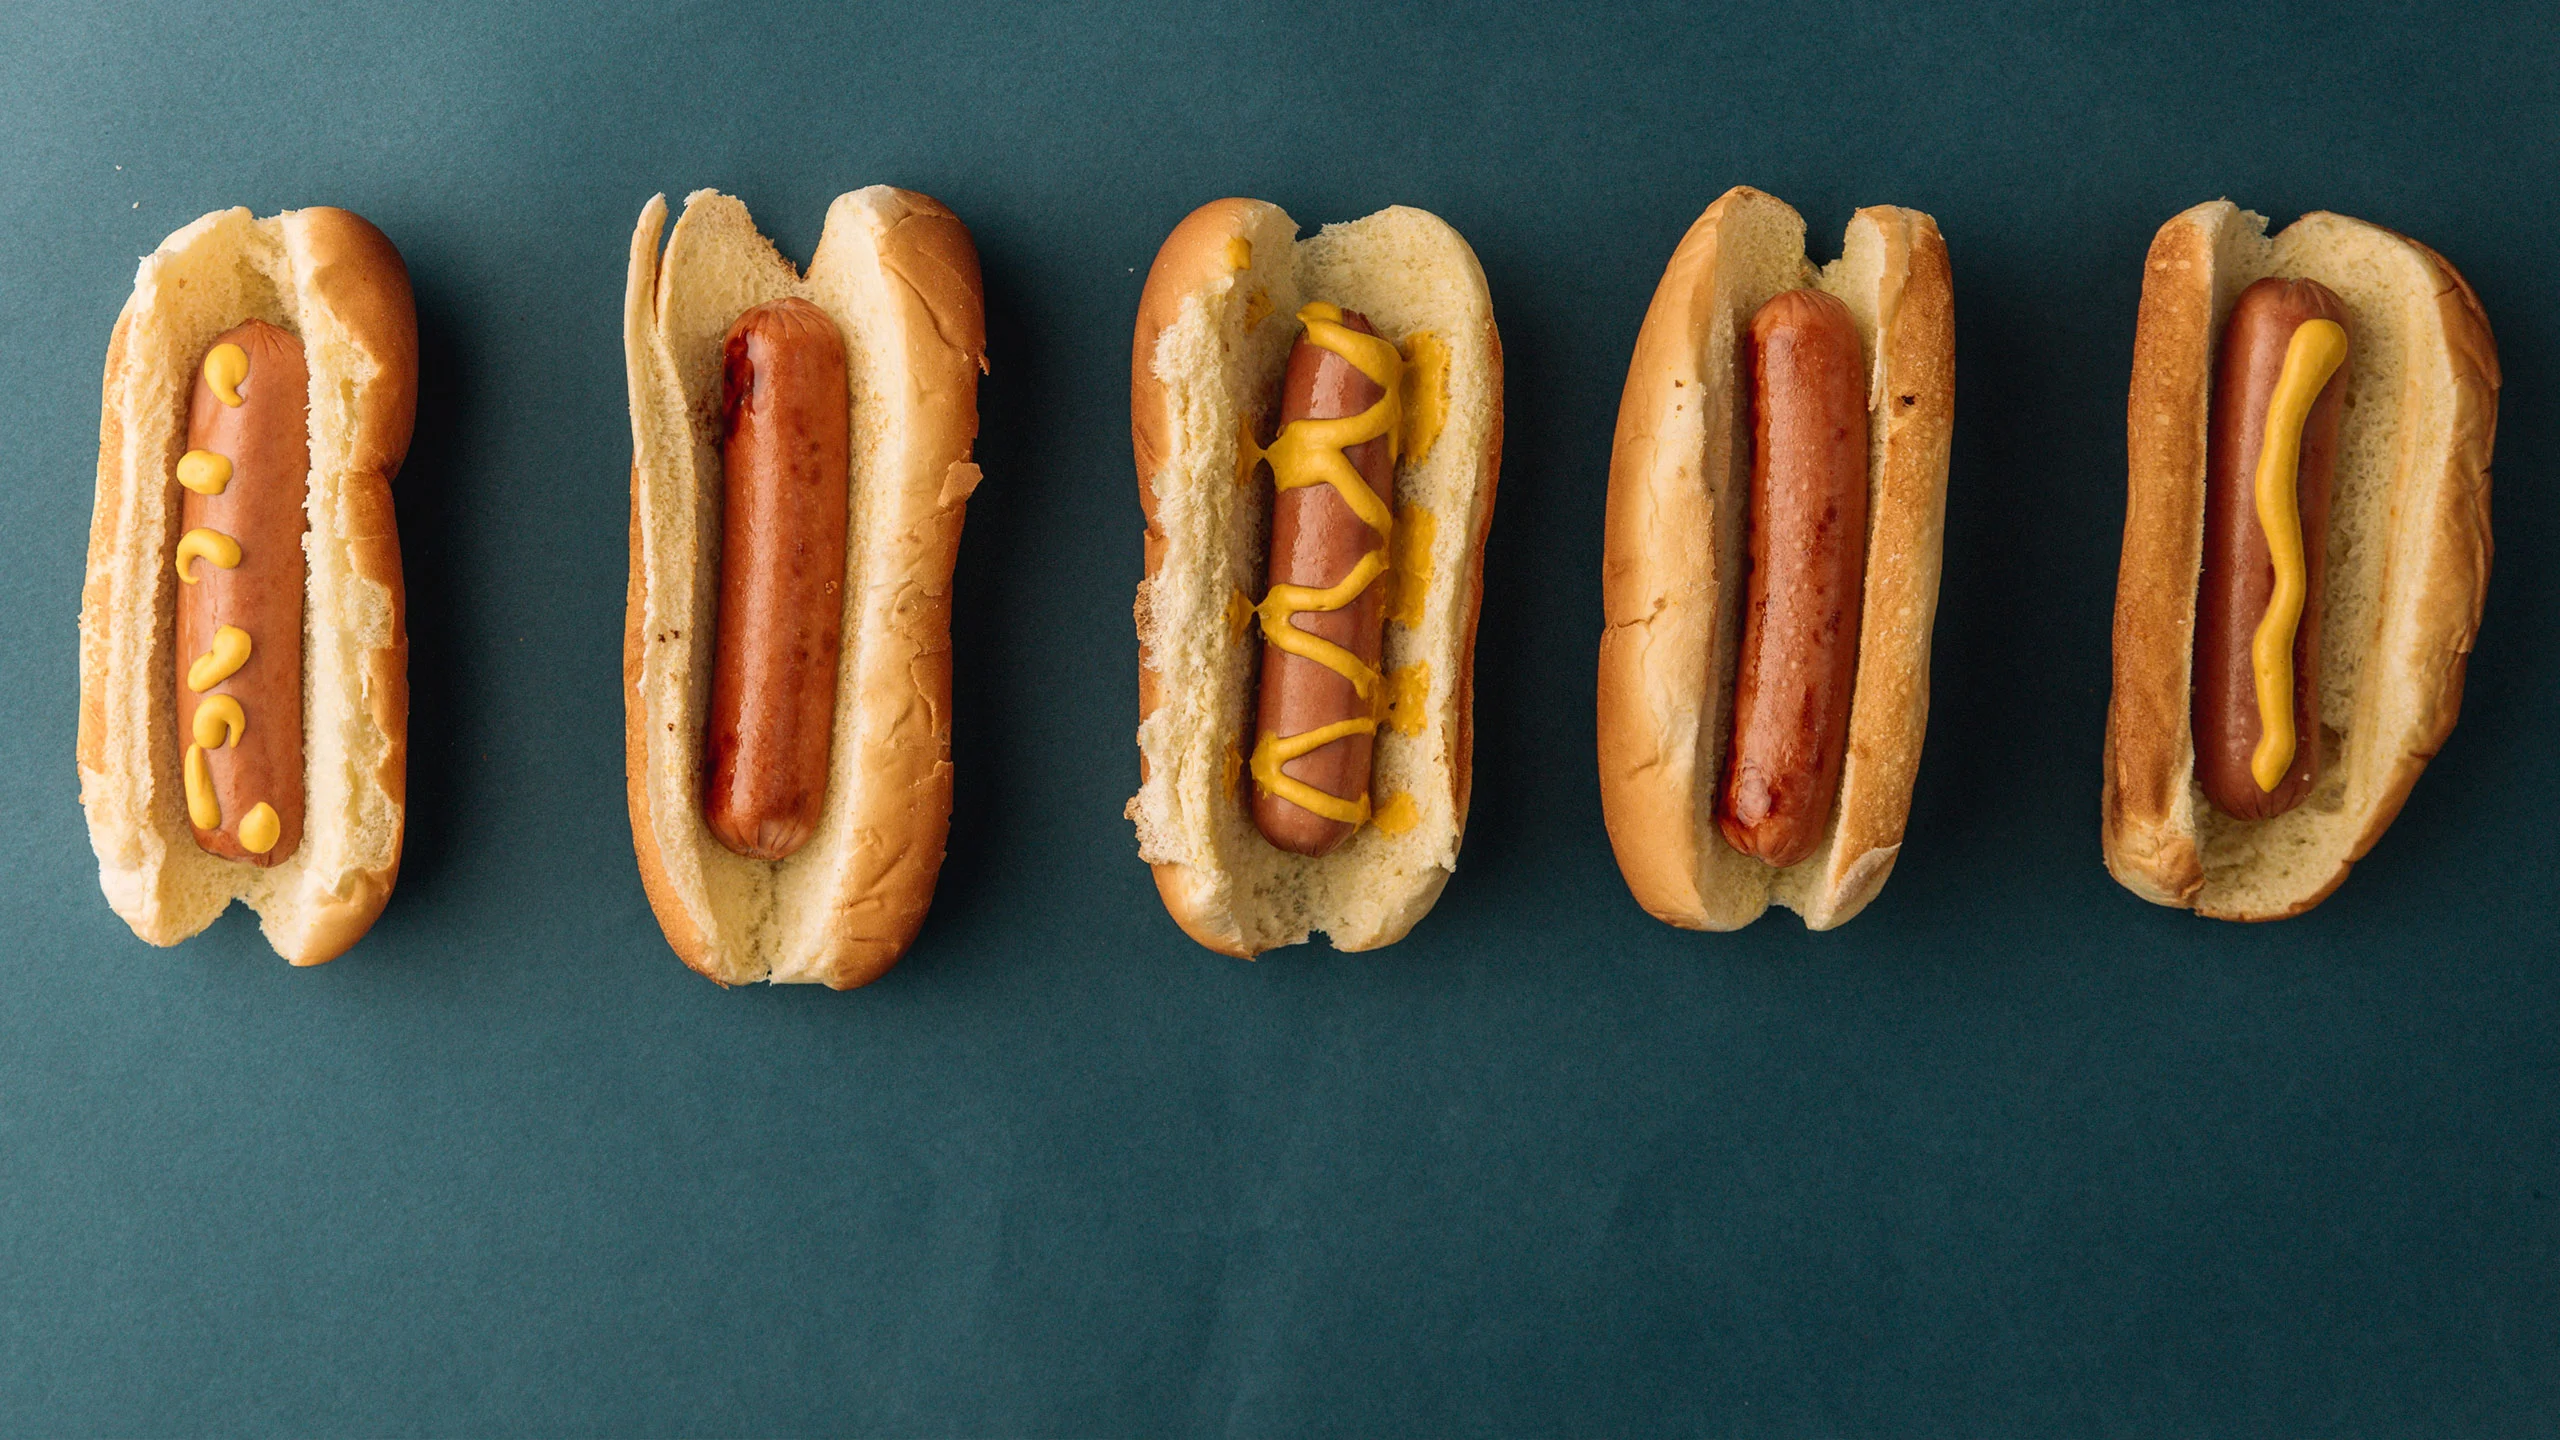 Estudio asegura que comer un hot dog te quita 36 minutos de vida